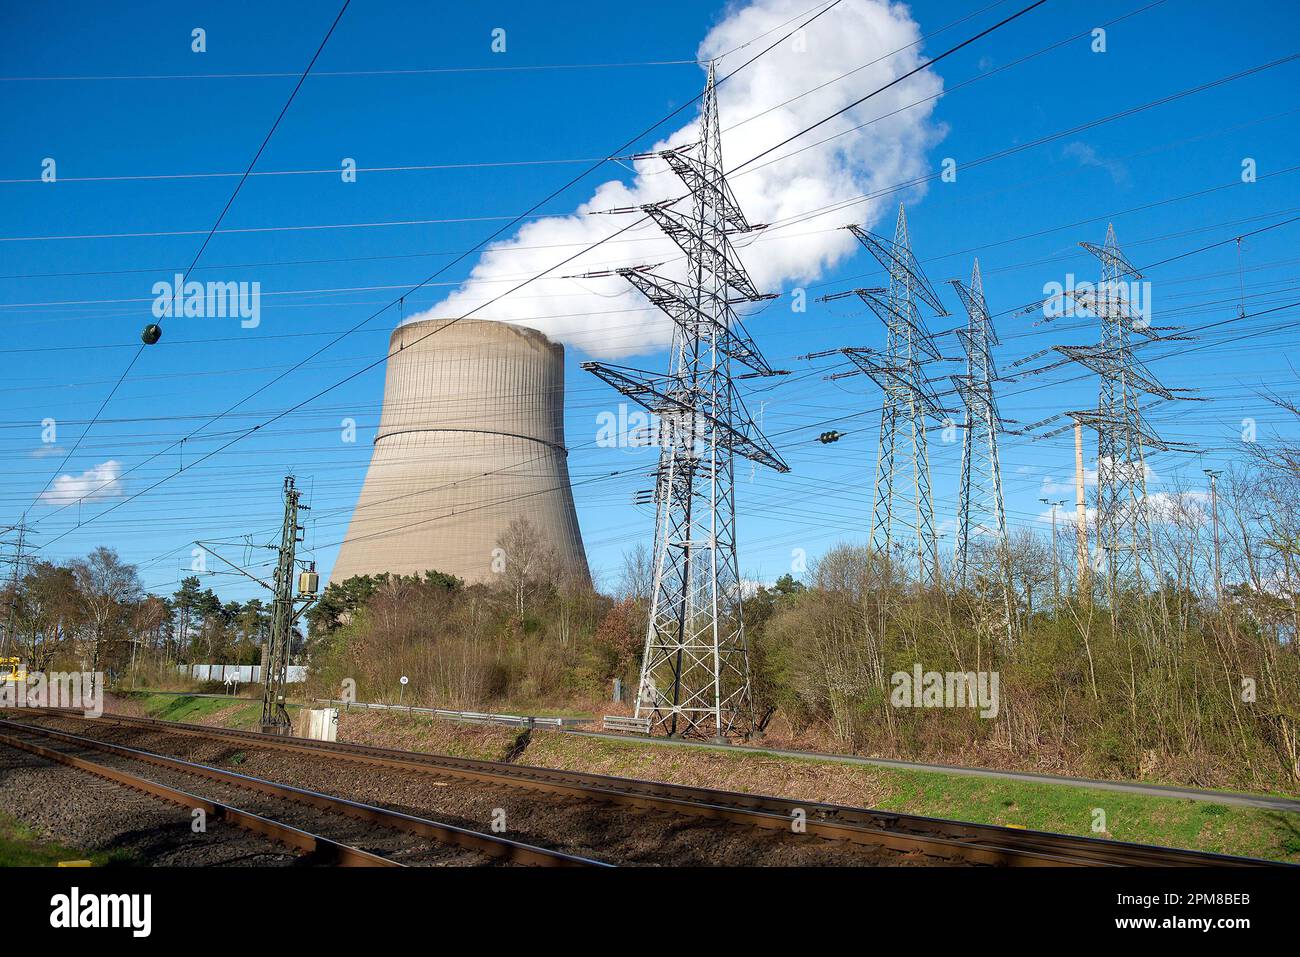 Atomkraftwerk in Lingen / RWE/  Emsland / Niedersachsen / Deutschland / nuclear power plant / npp / Germany Stock Photo